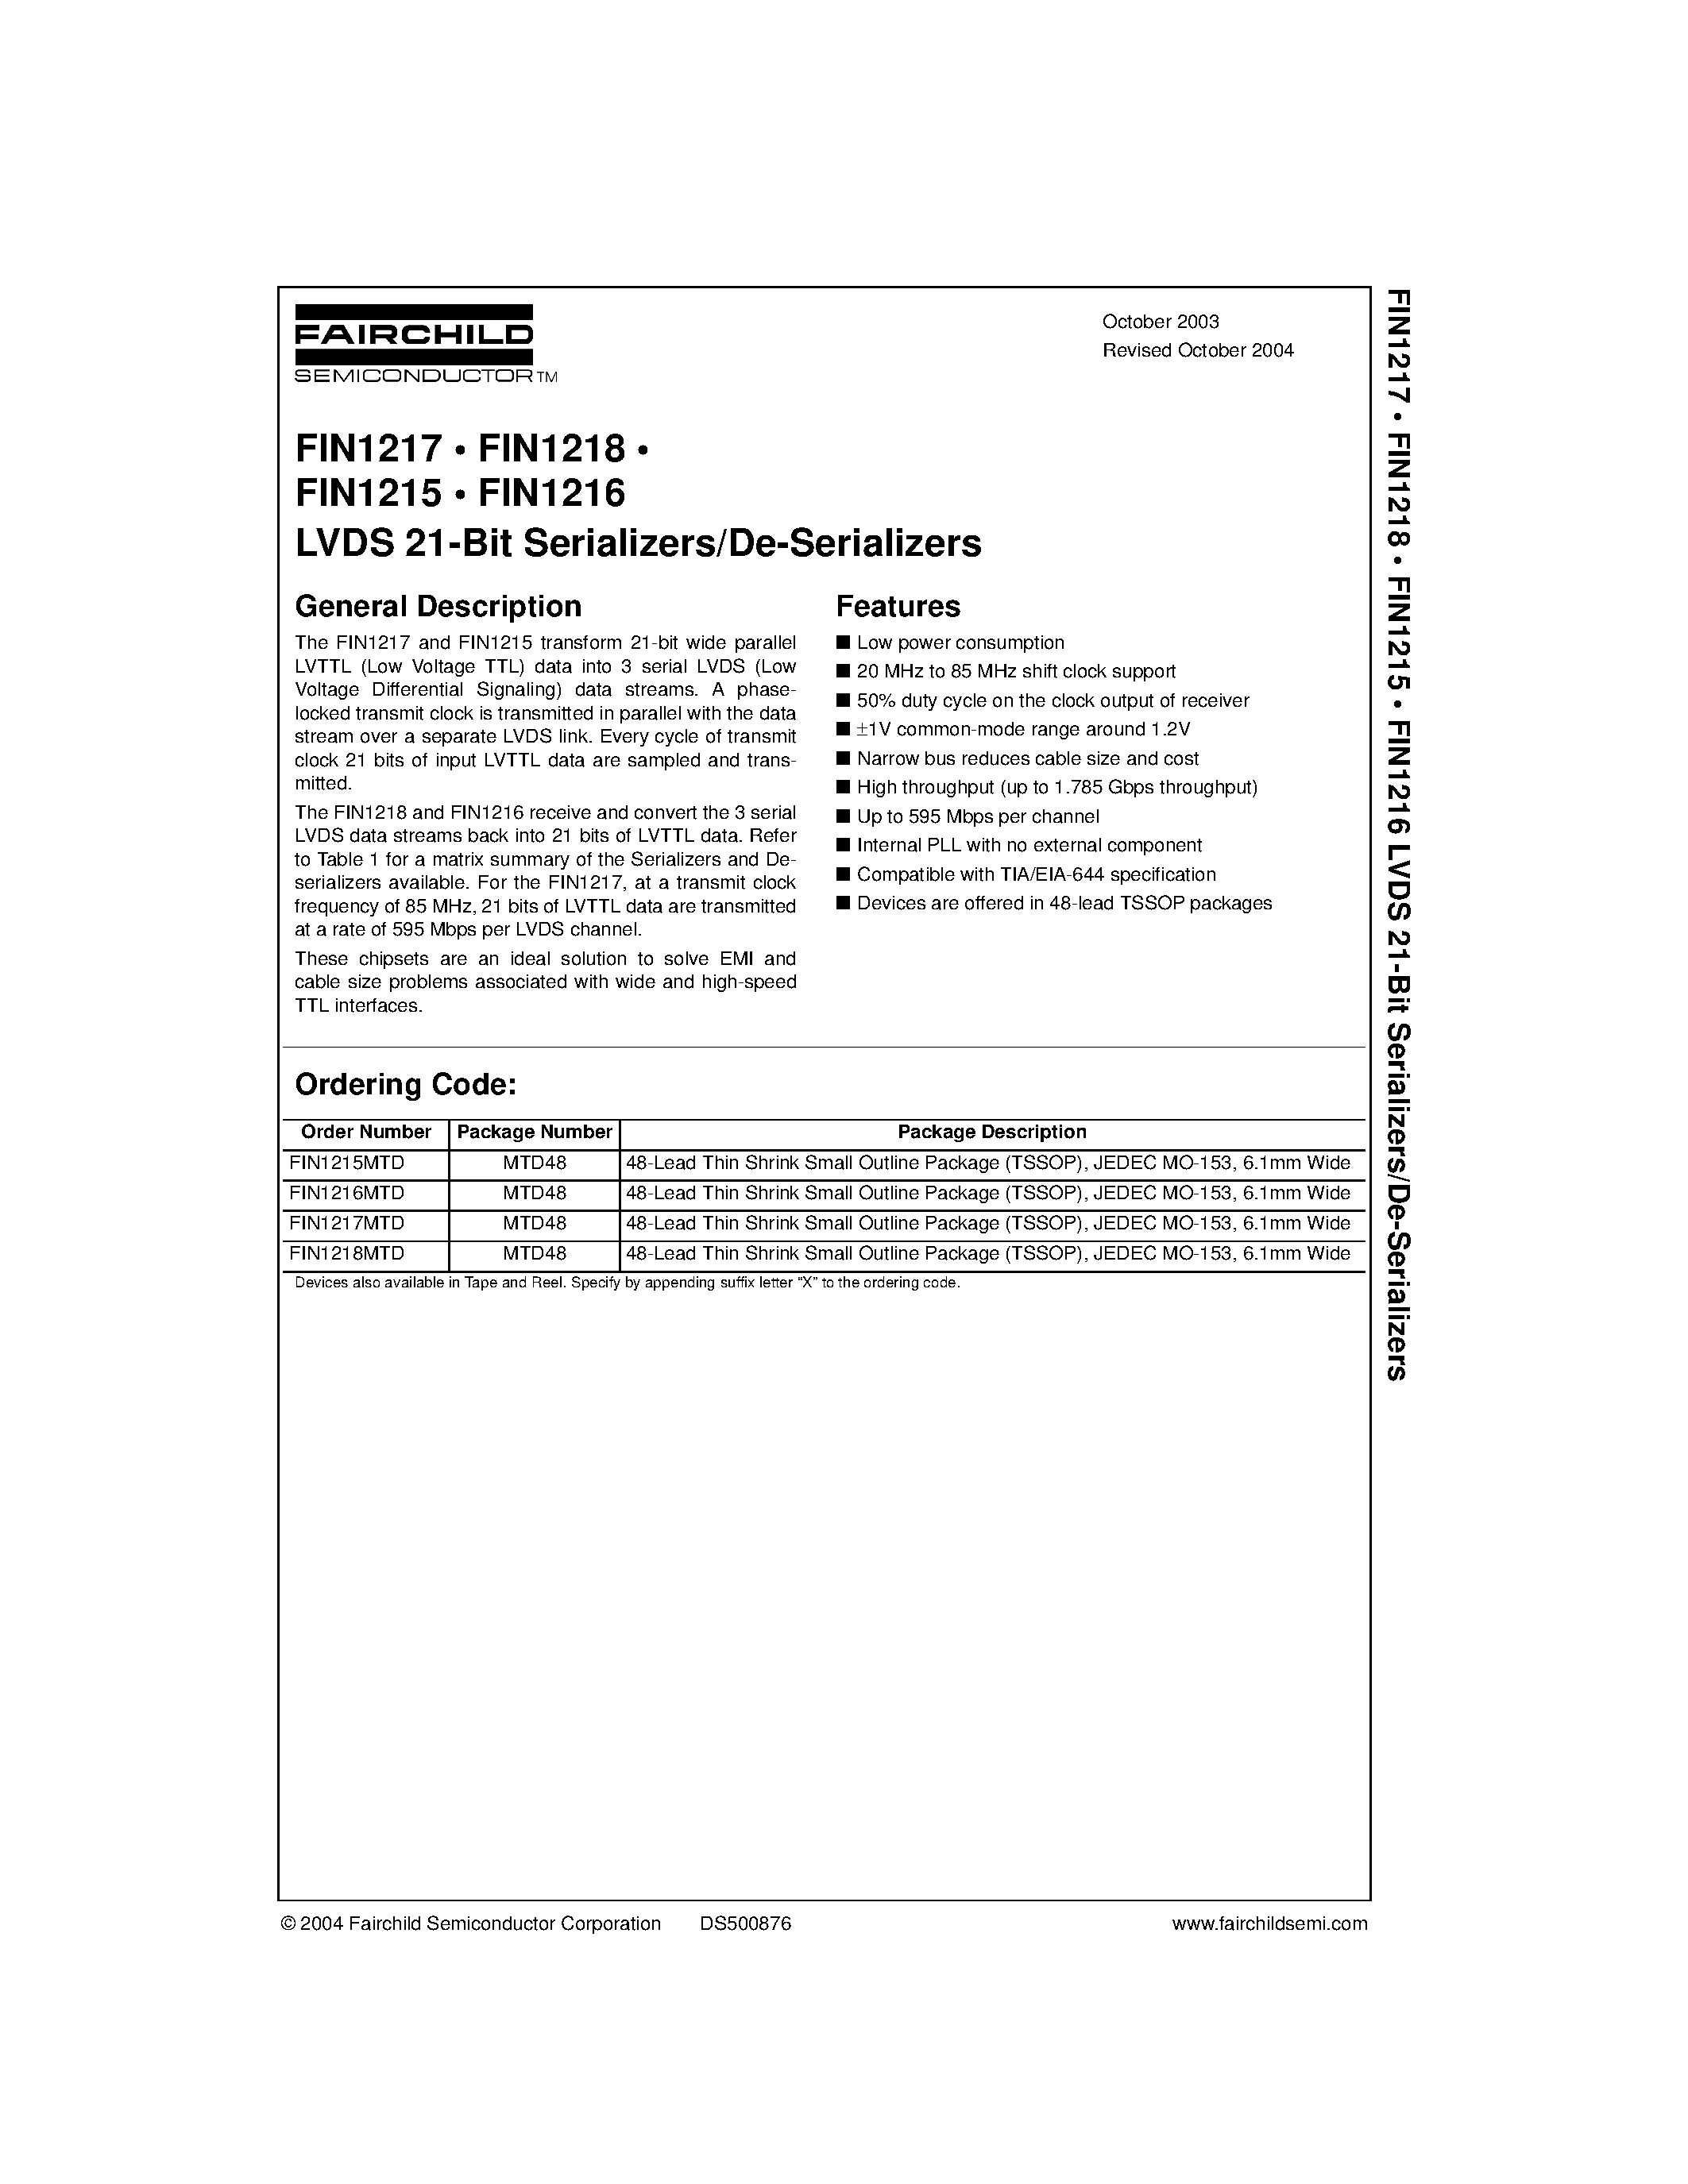 Datasheet FIN1218 - LVDS 21-Bit Serializers/De-Serializers page 1